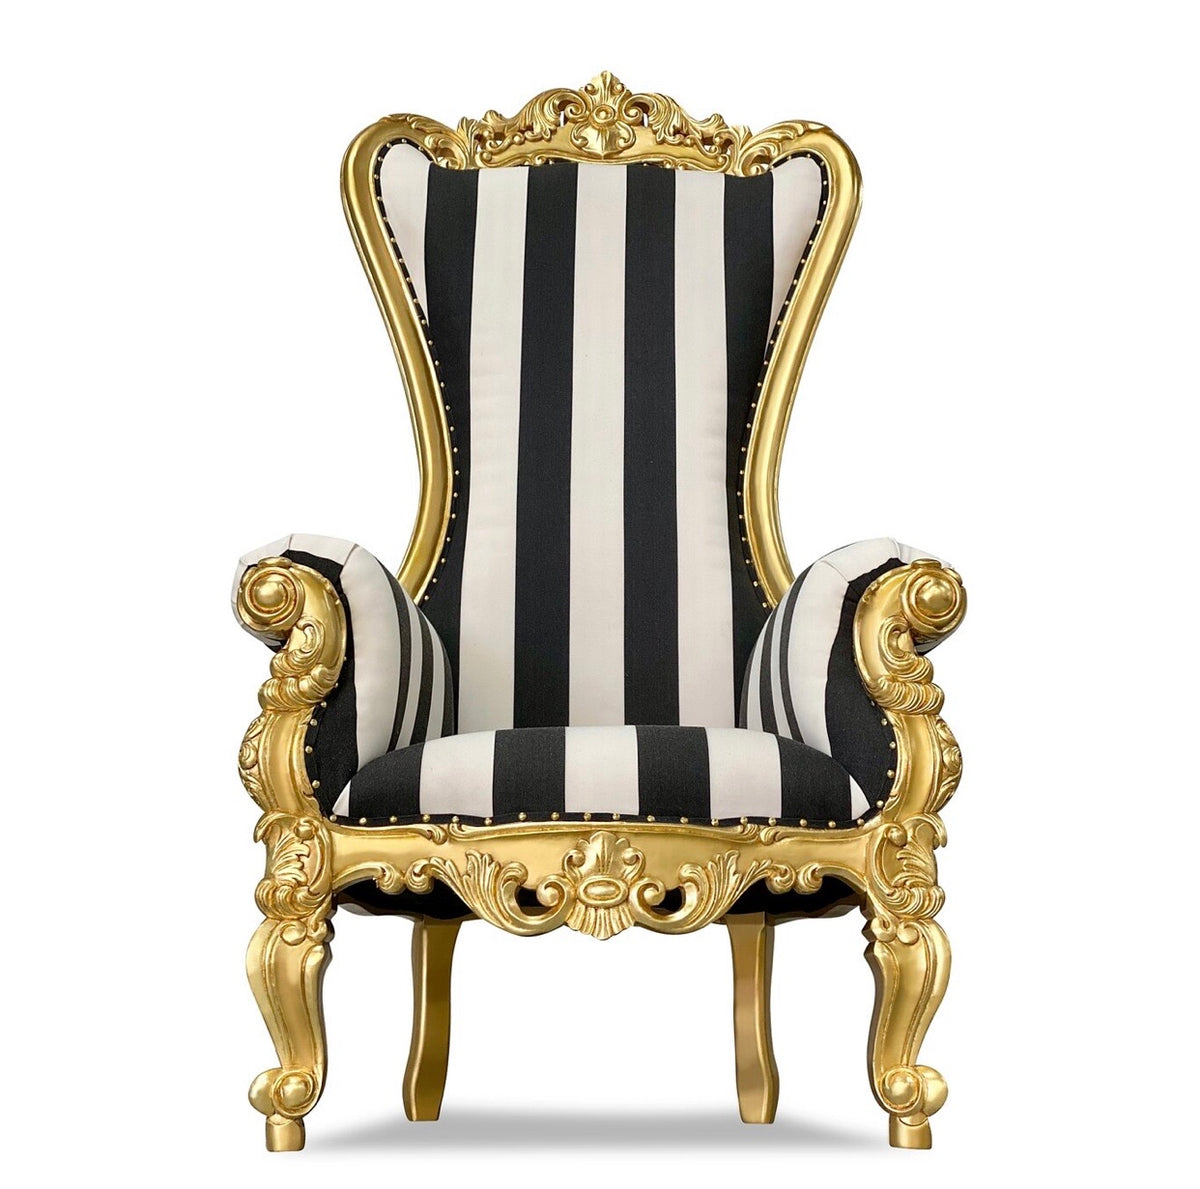 Black & White Striped/Gold Royal Throne Chair